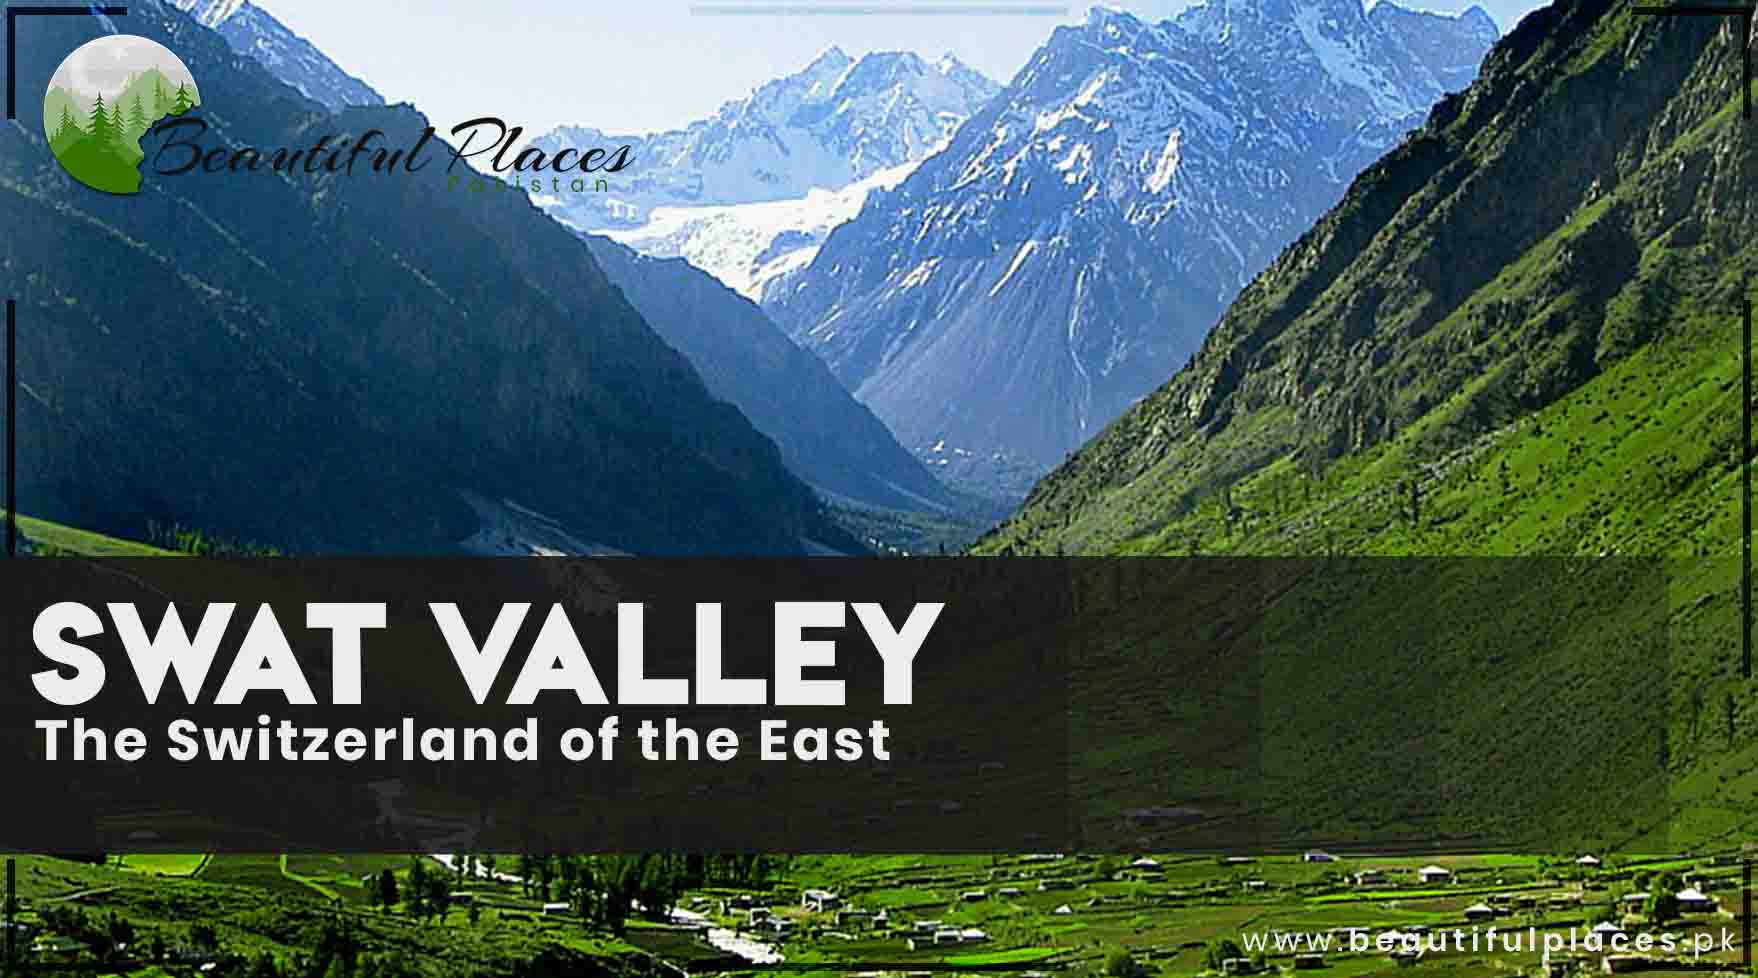 Swat Valley (KPK) - The Switzerland of the East